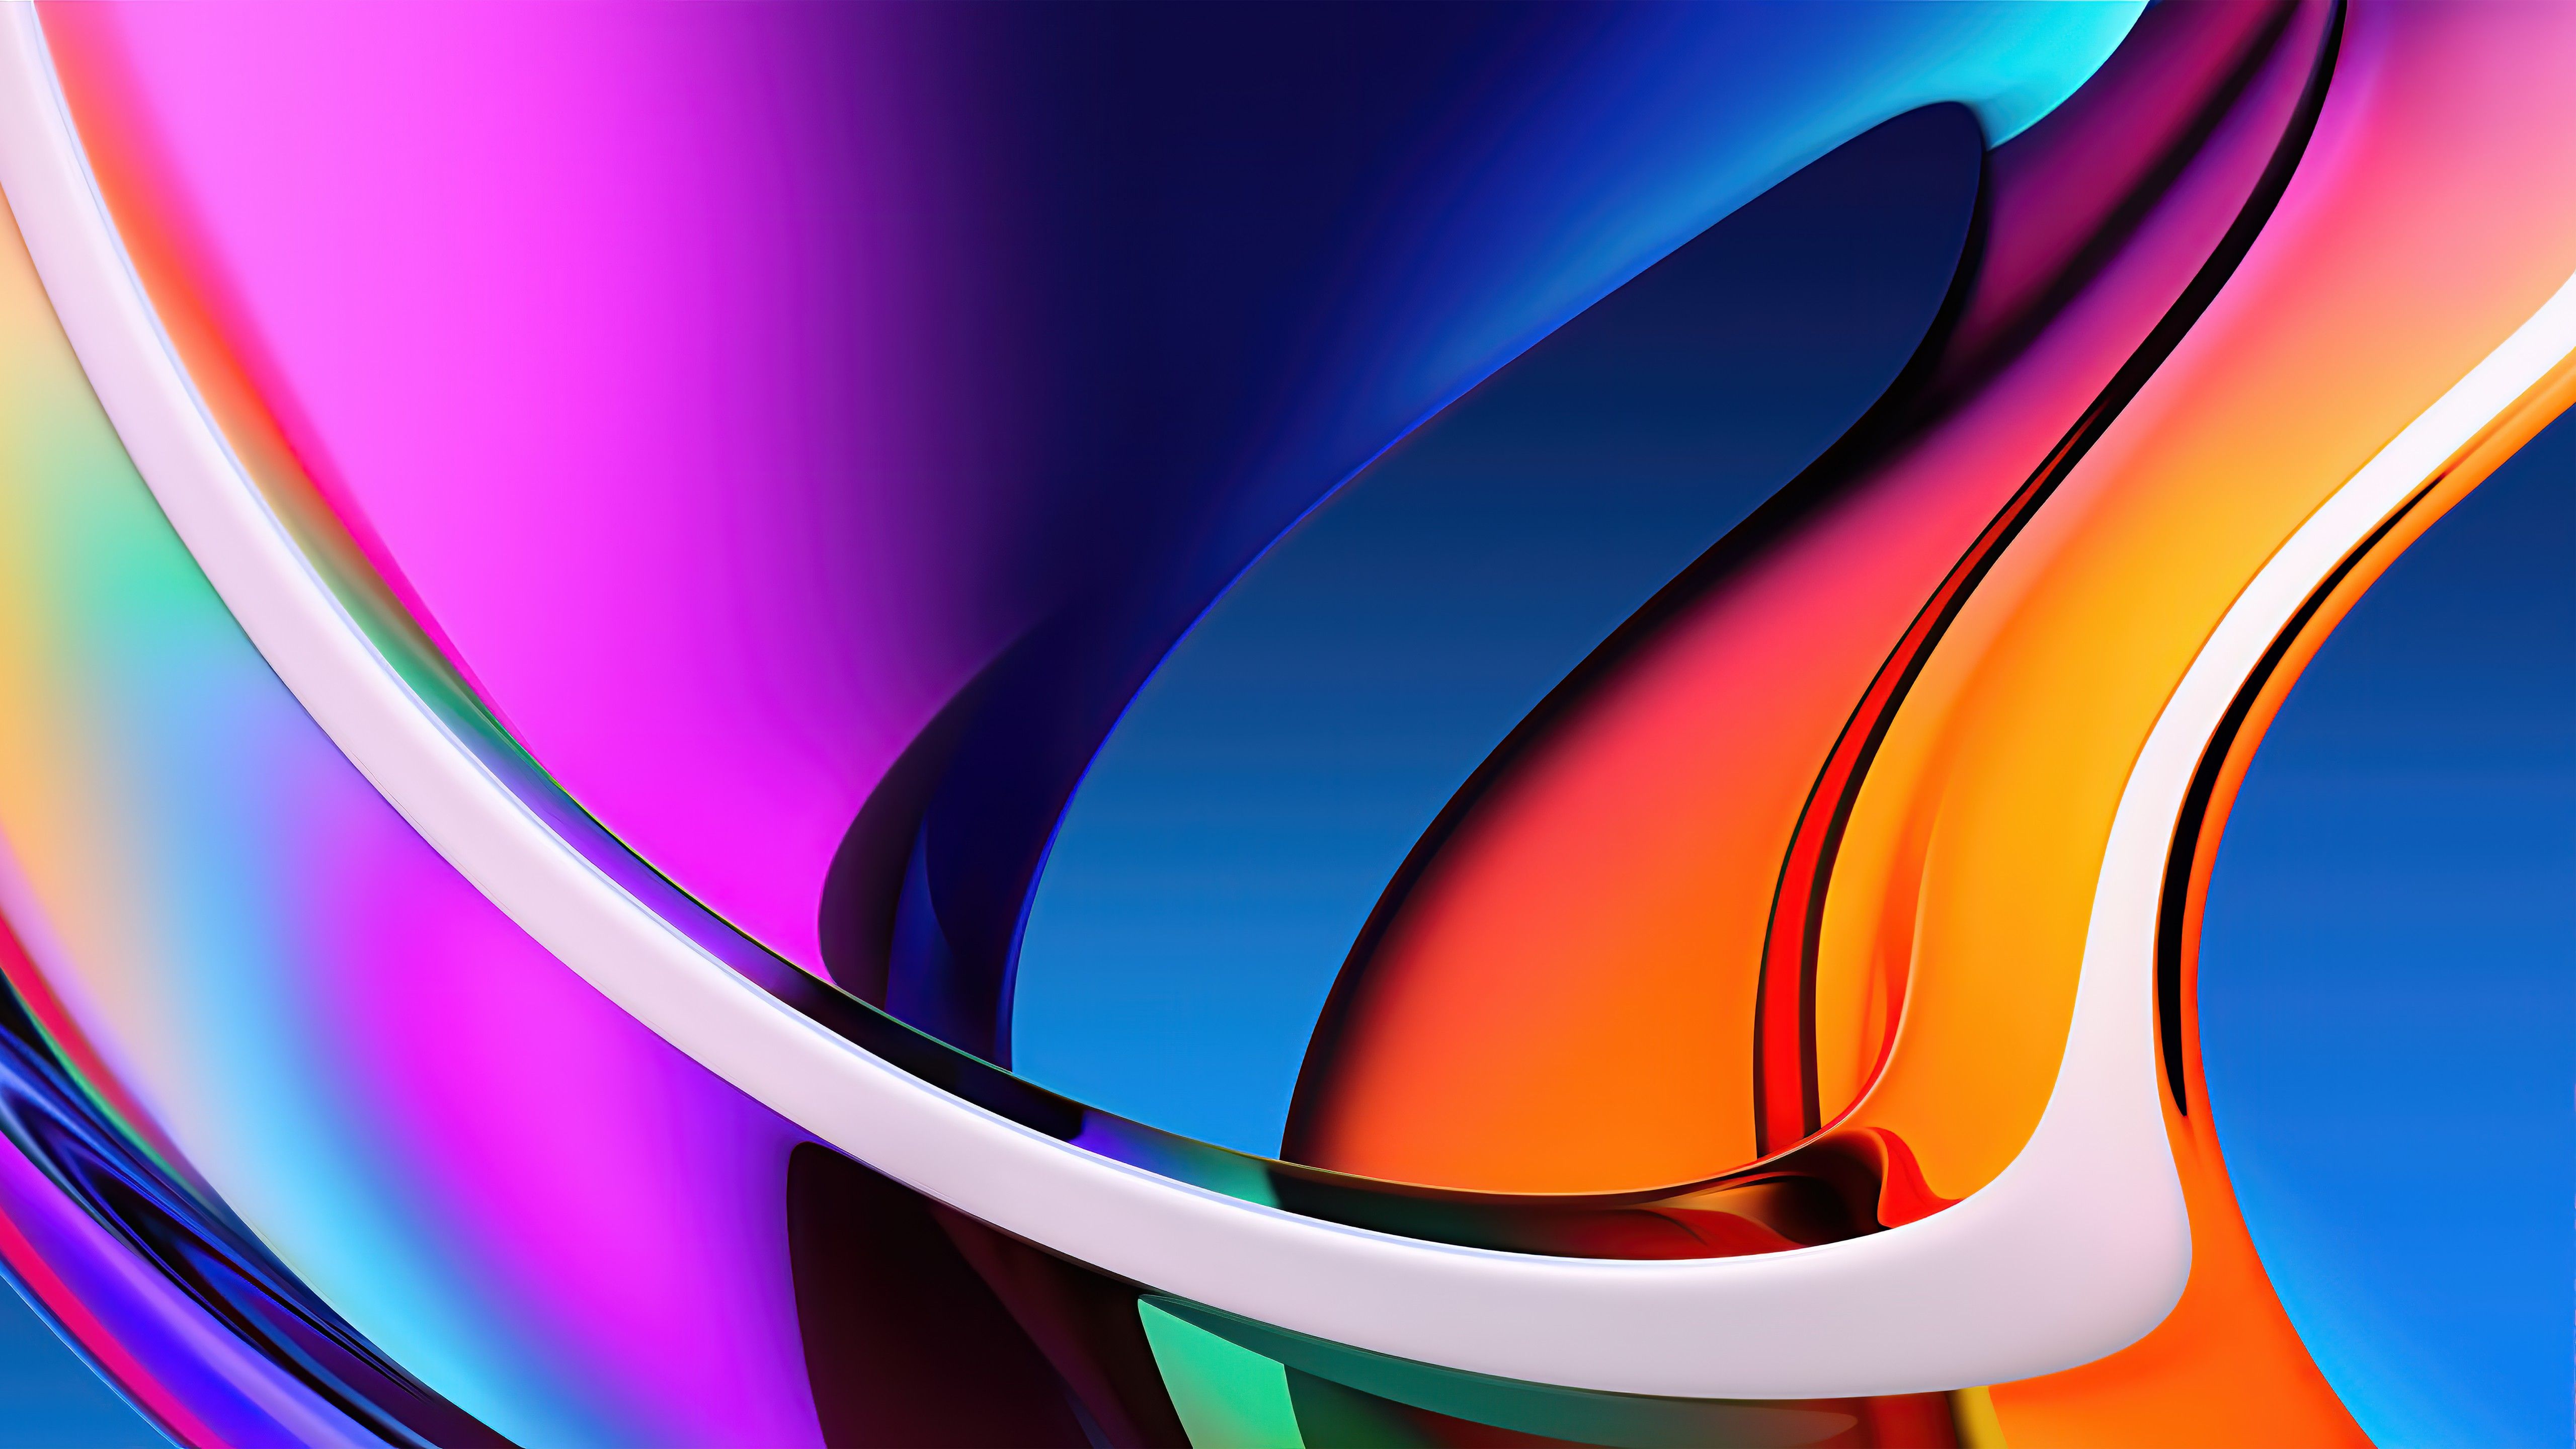 Apple iMac Wallpaper 4K, Colorful, Stock, Retina Display, Gradients, Abstract